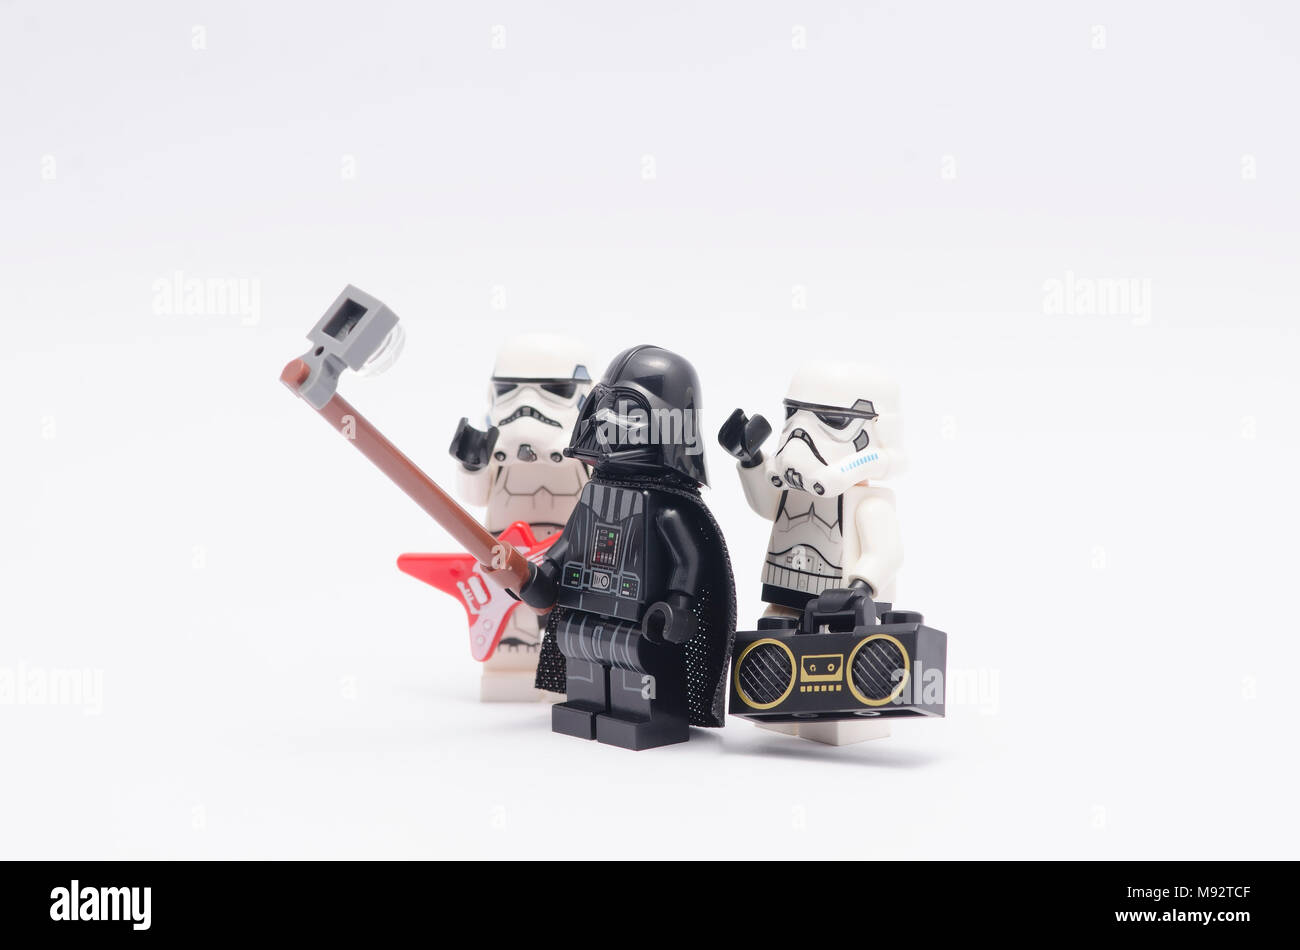 Star Wars lego Darth Vader and Stormtrooper figure selfie Picture 